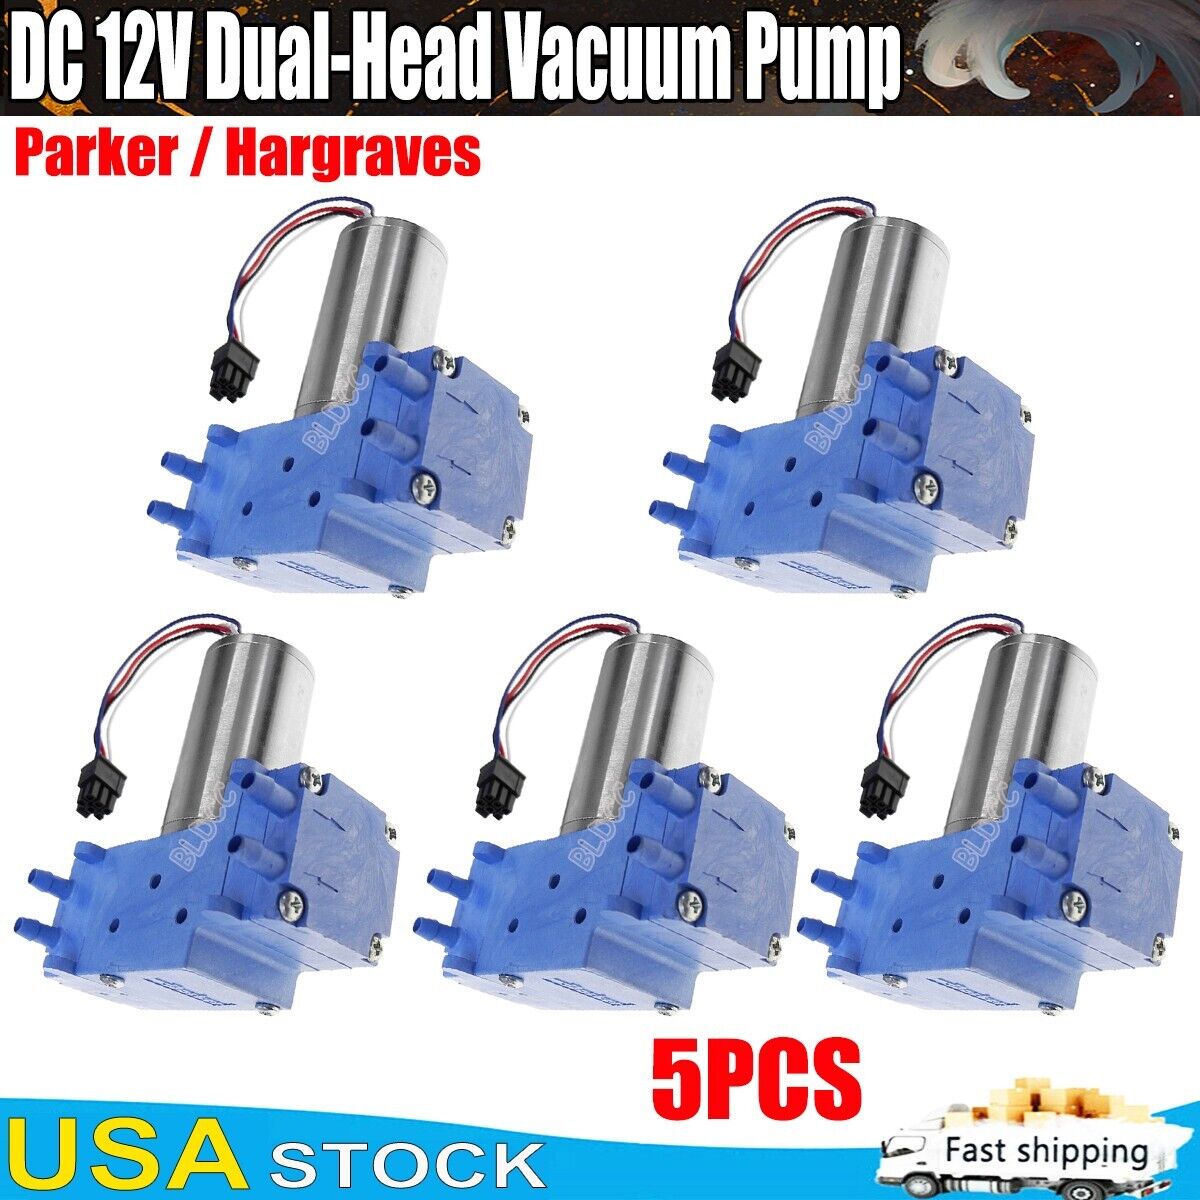 5PCS Dual-Head Diaphragm Vacuum Pump Brushless Motor Air Pump Parker / Hargraves